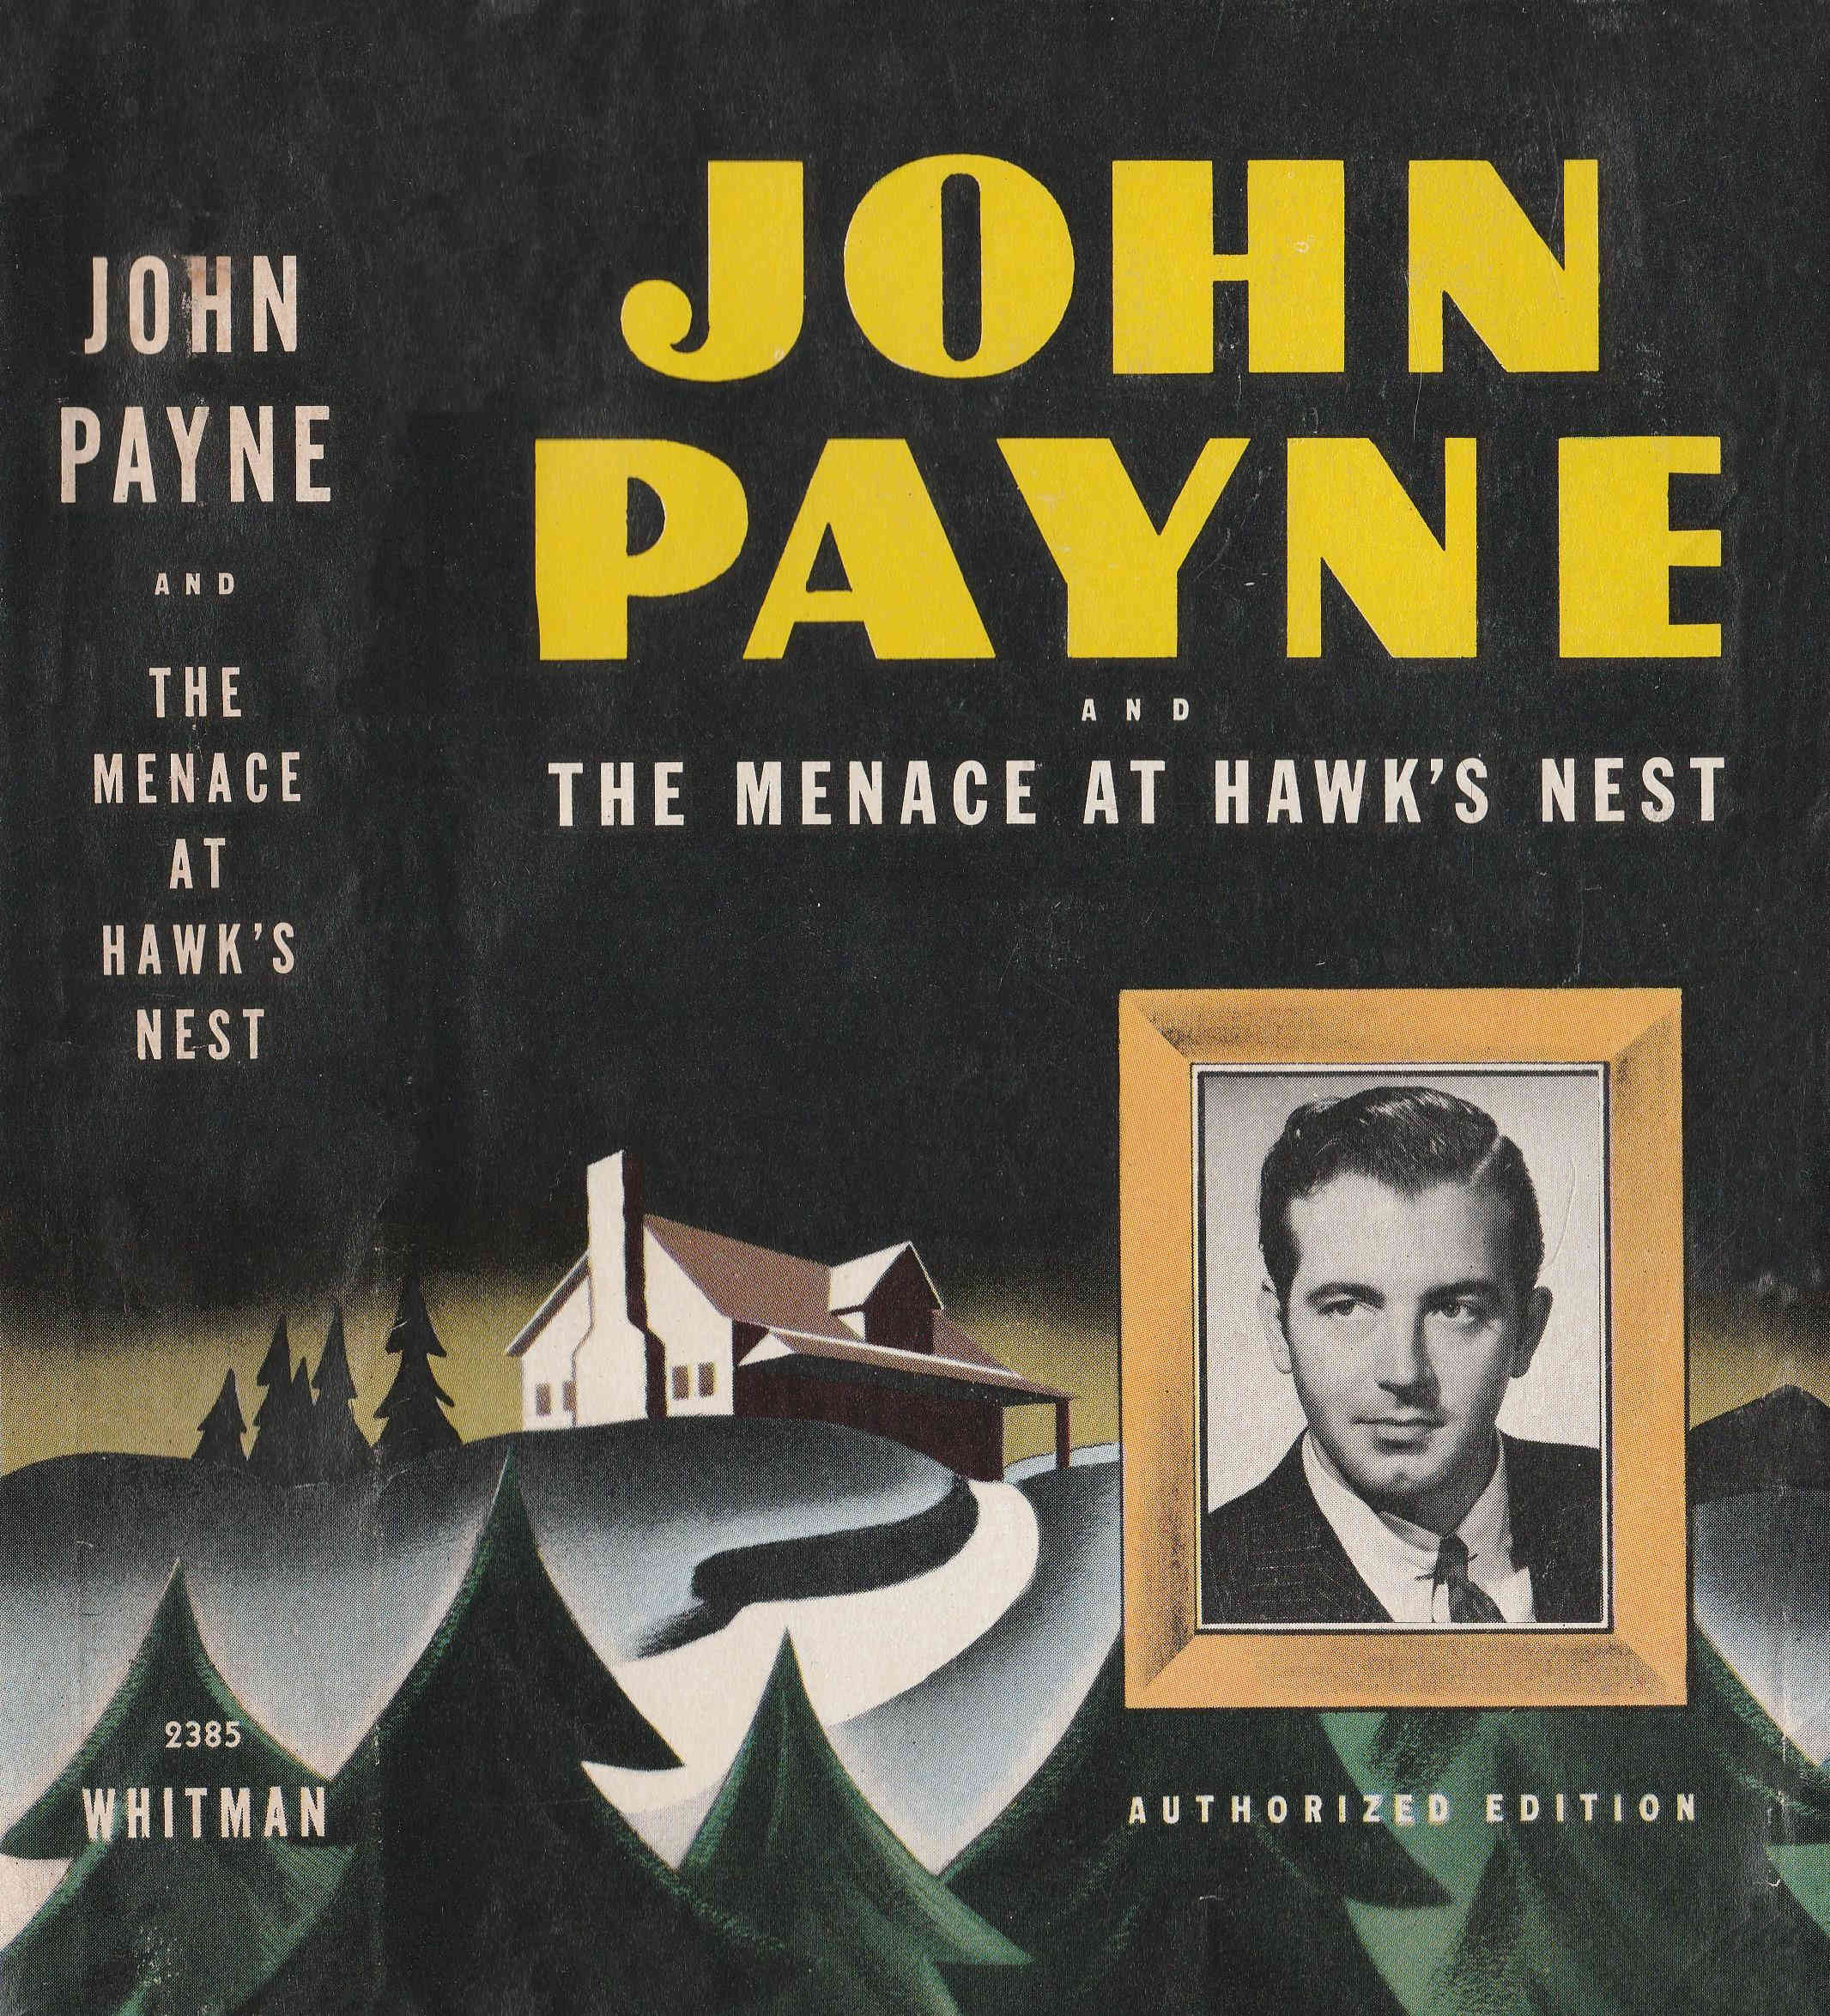 John Payne and the Menace of Hawk's Nest